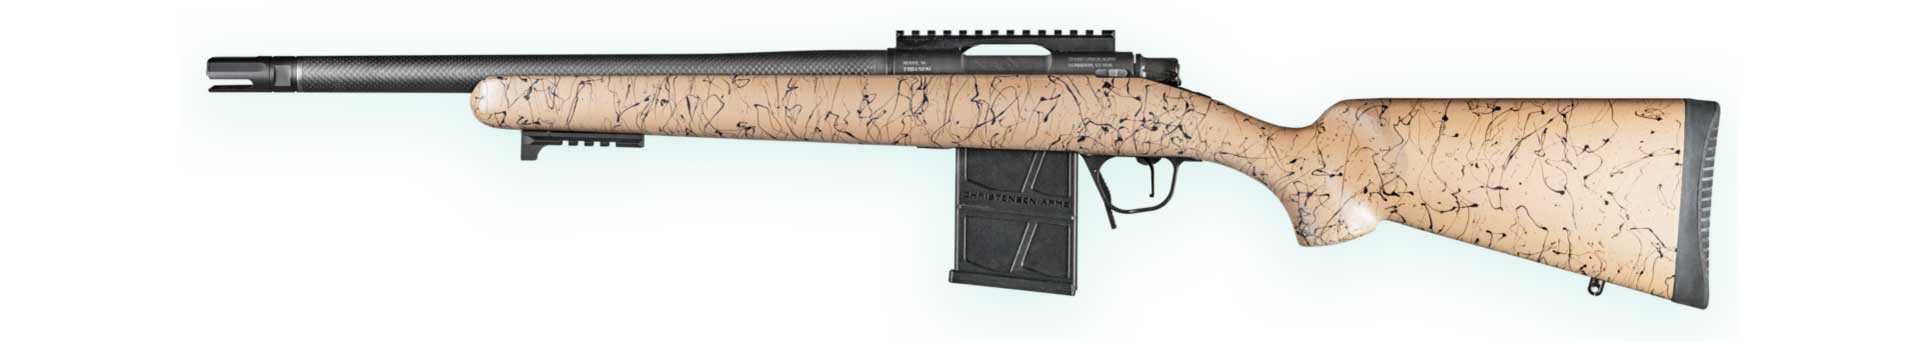 left-side bolt-action rifle brown carbon-fiber barrel steel receiver black tan stock gun white background